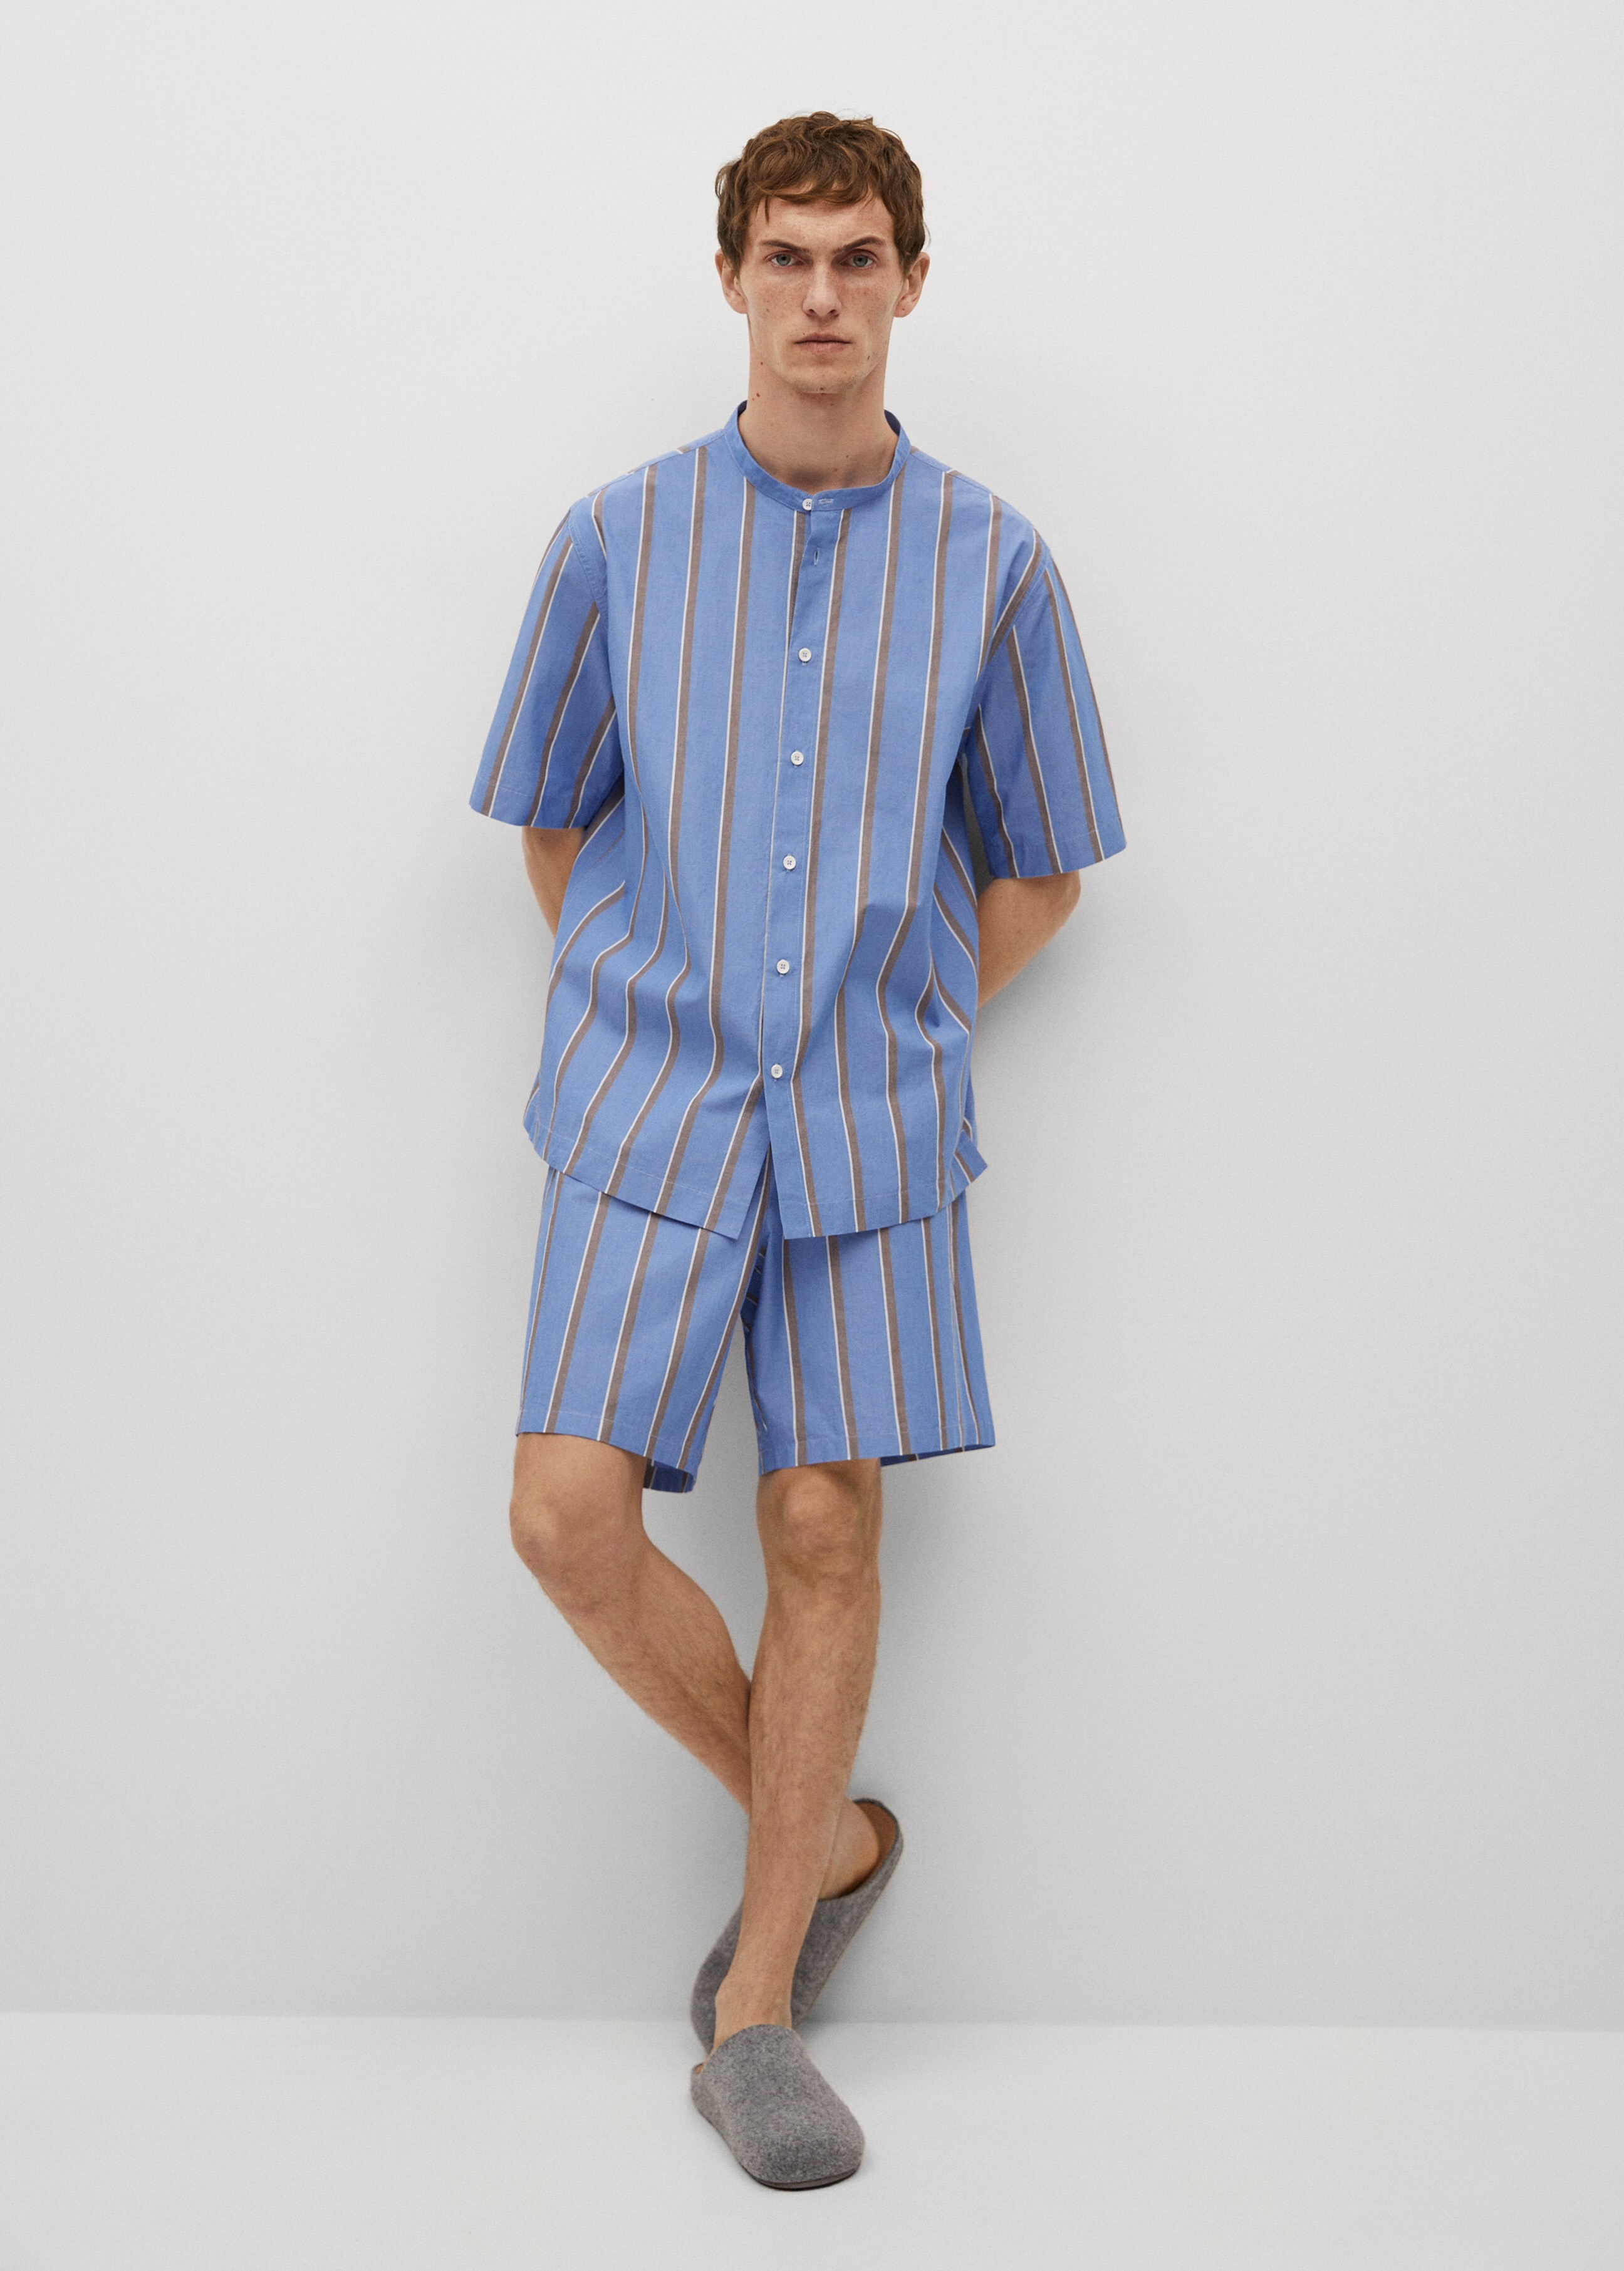 Striped pyjama shirt - General plane